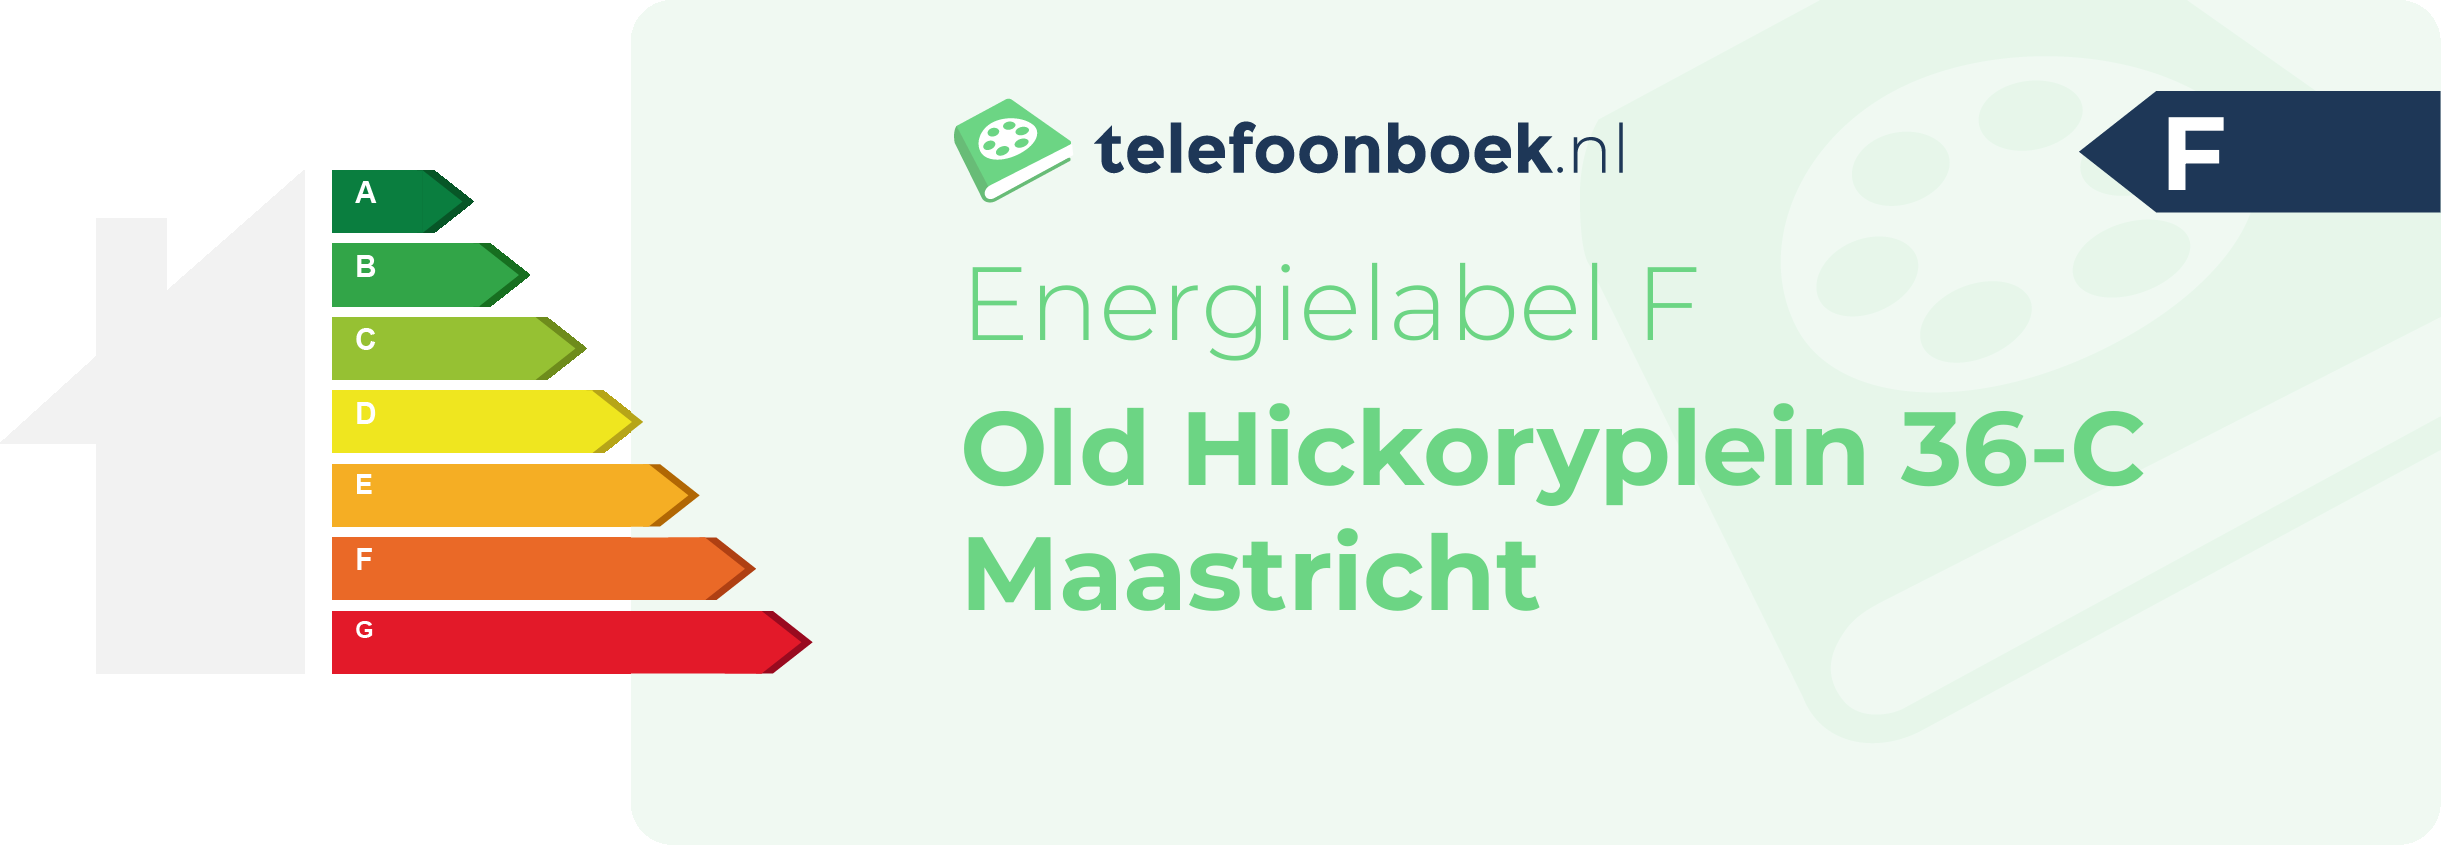 Energielabel Old Hickoryplein 36-C Maastricht